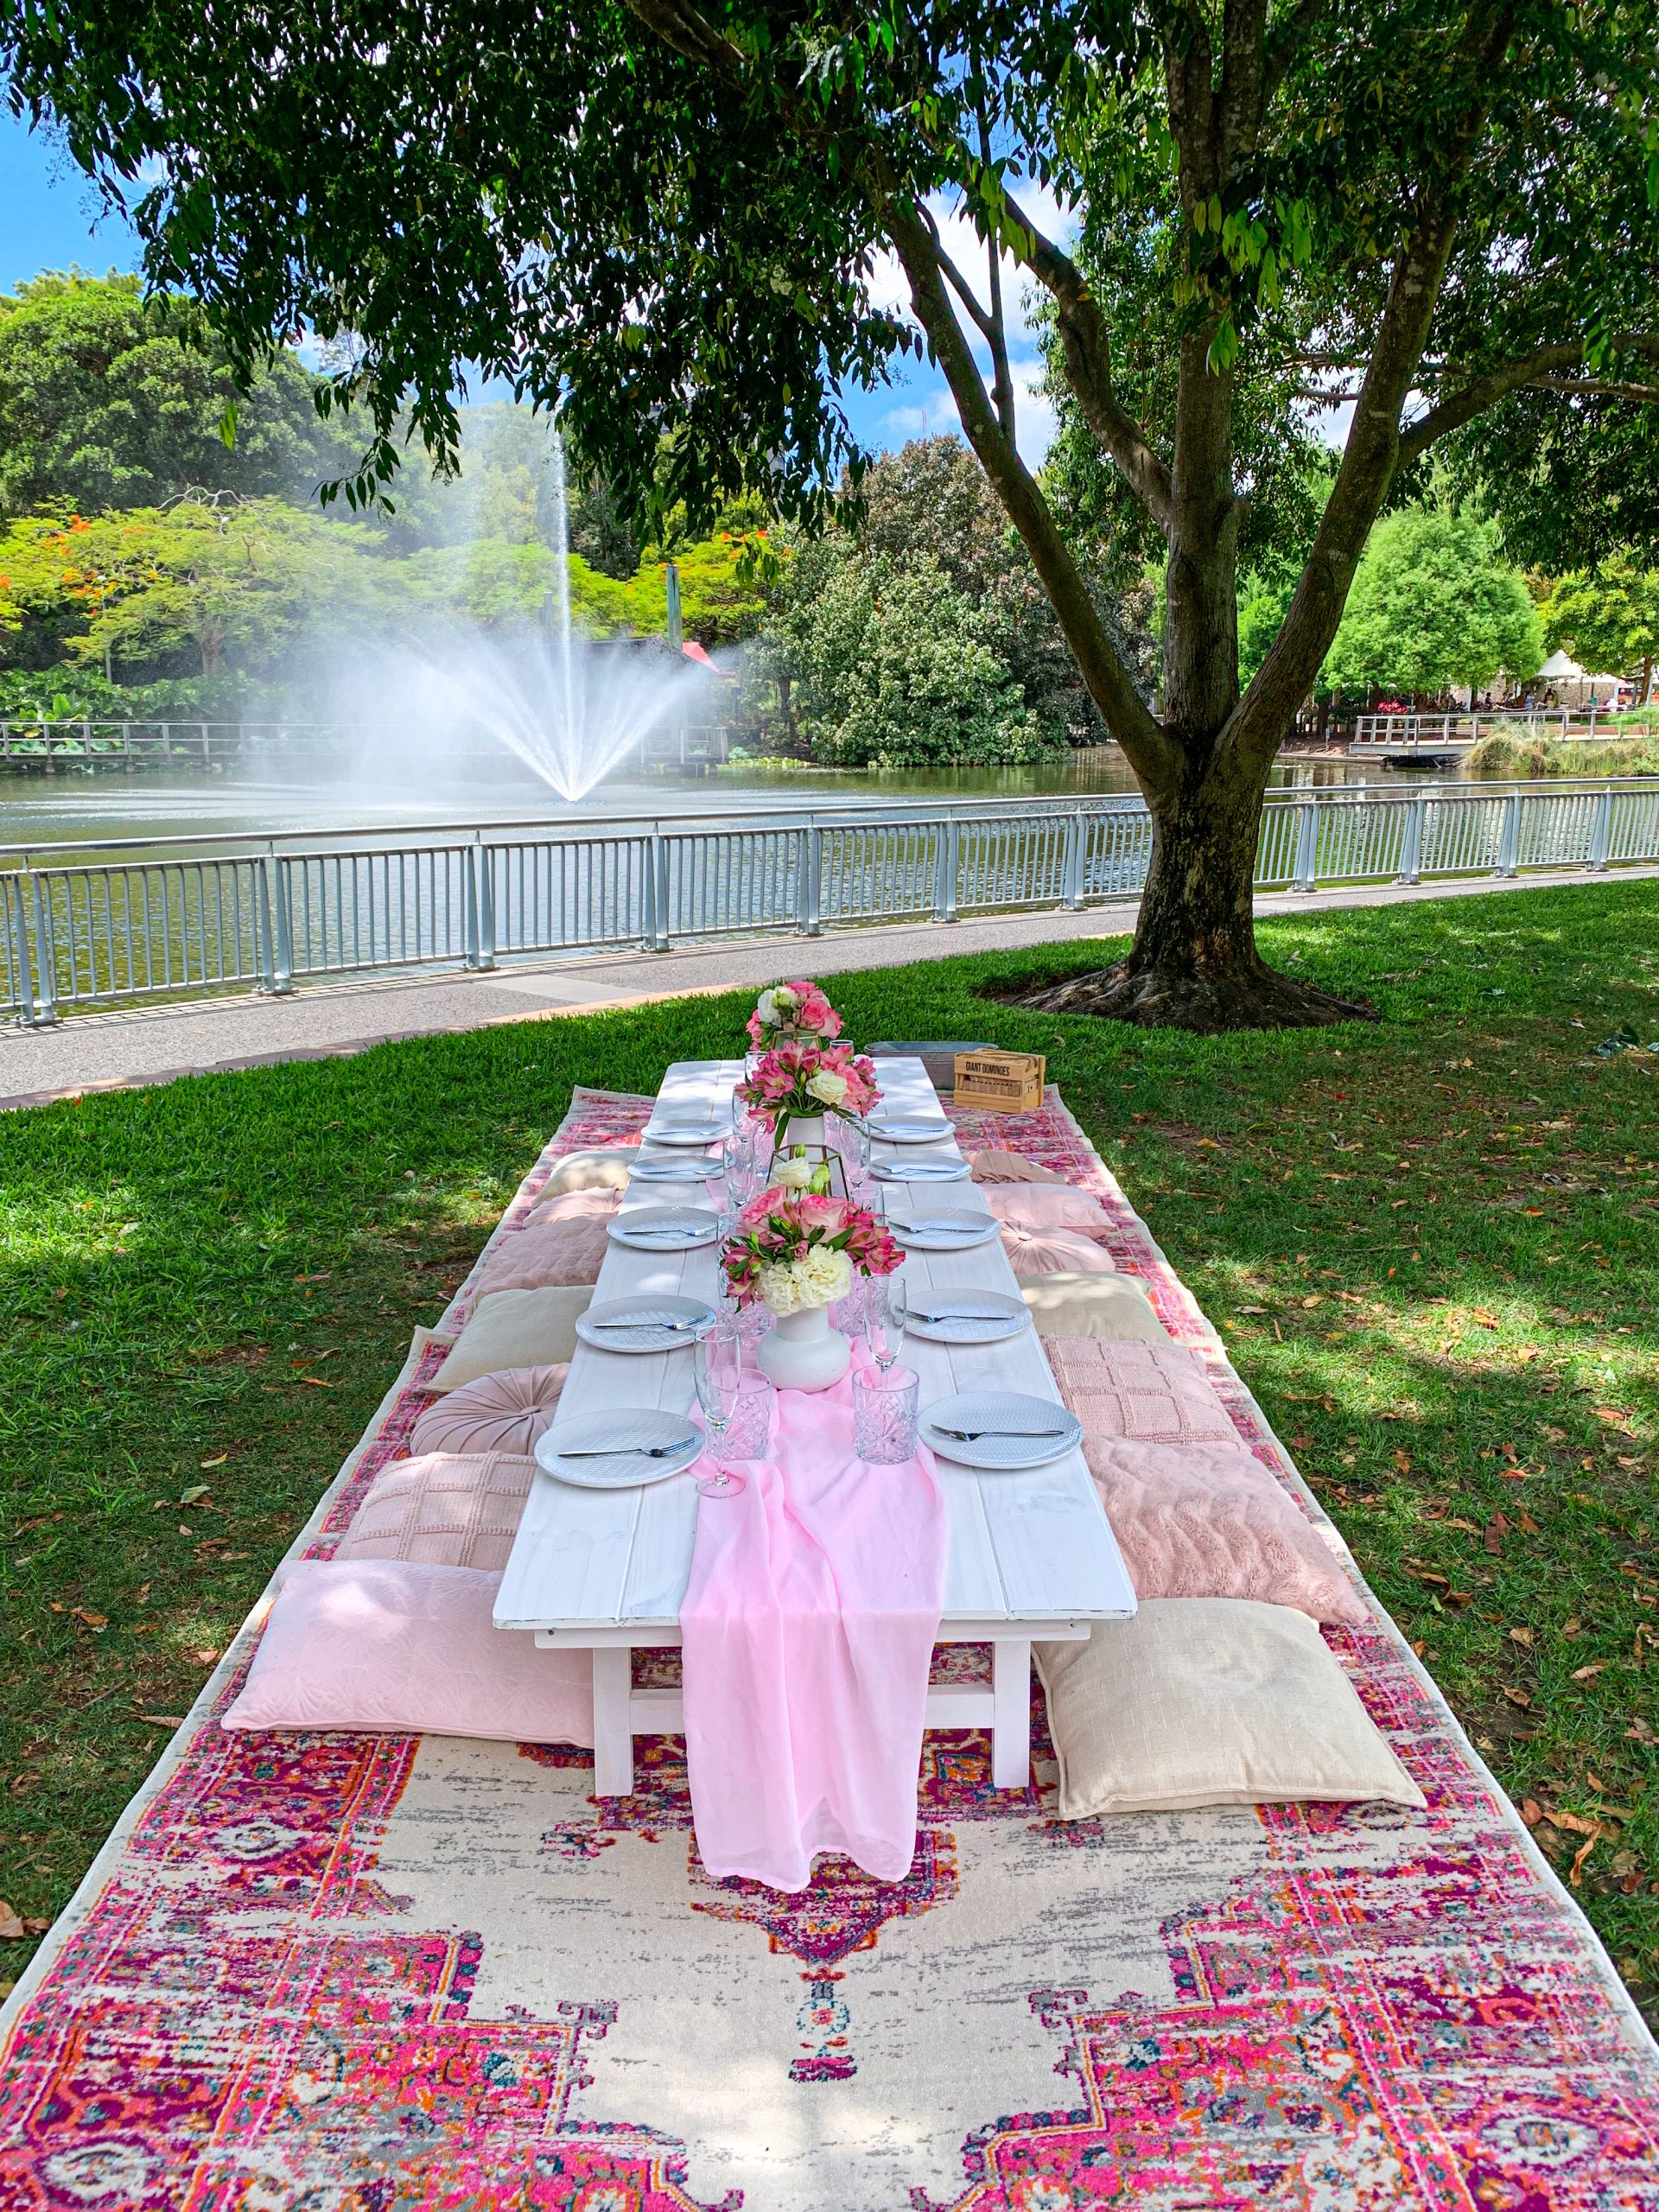 Pretty in pink picnic